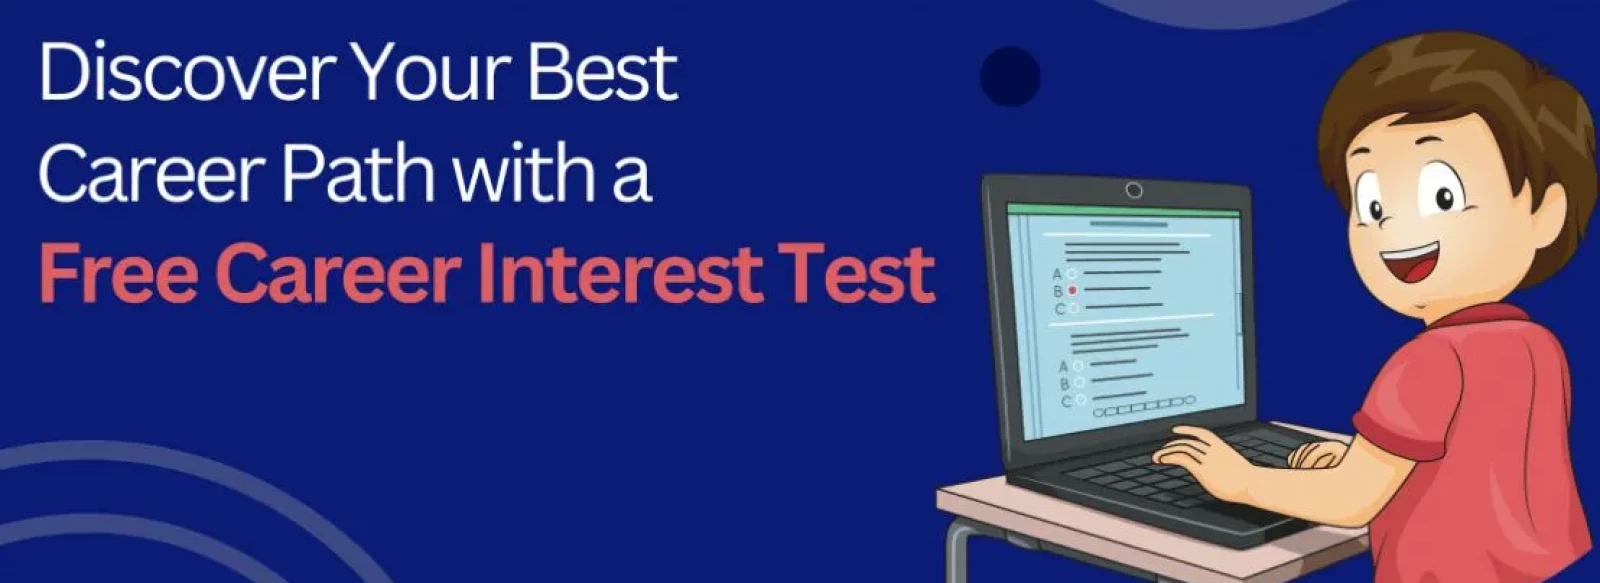 Free Career Interest Test